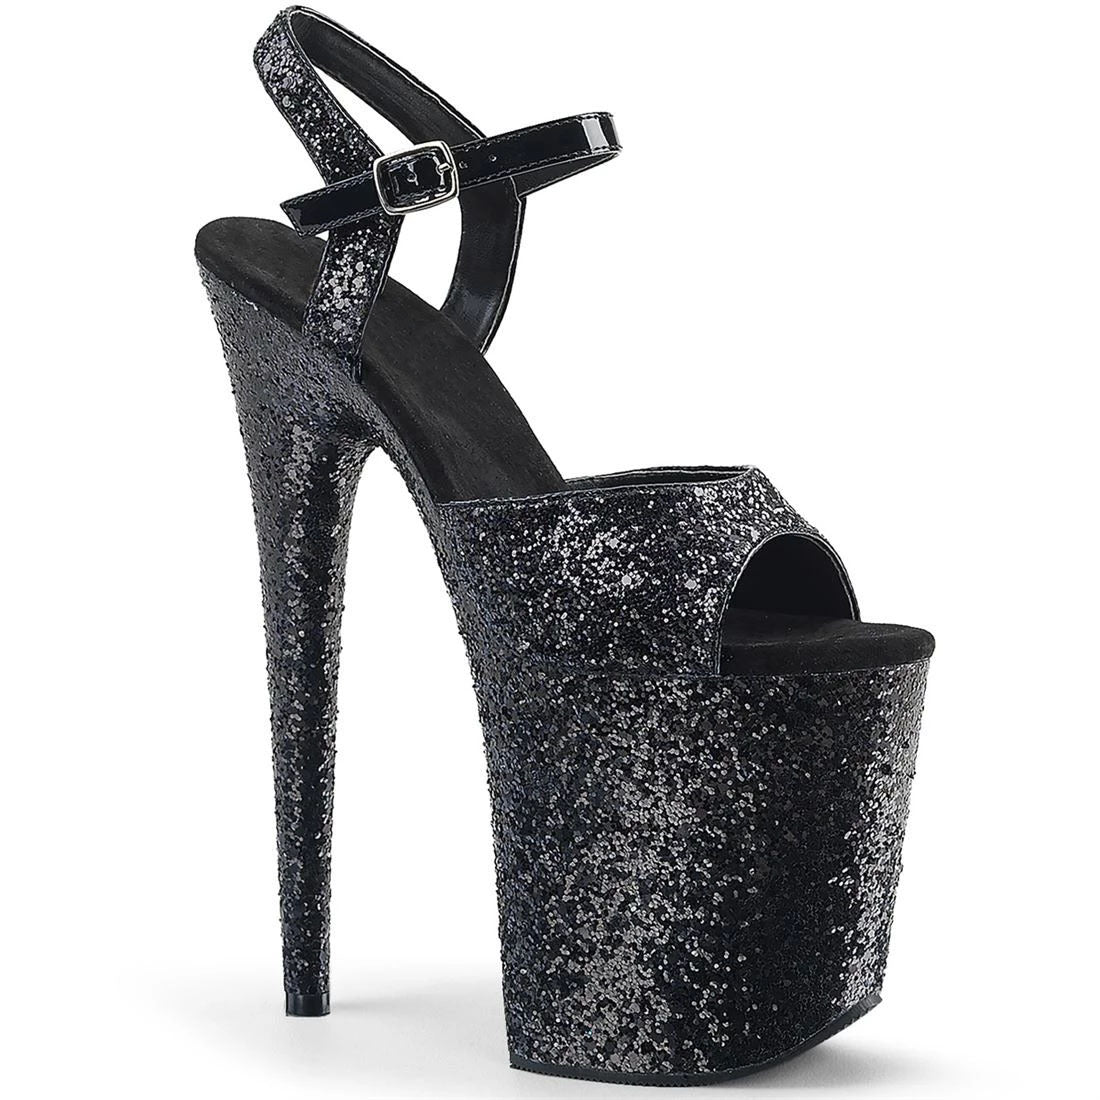 BLACK - Hengtian High Flashing Waterproof Platform Stiletto High Heels - womens shoe at TFC&H Co.